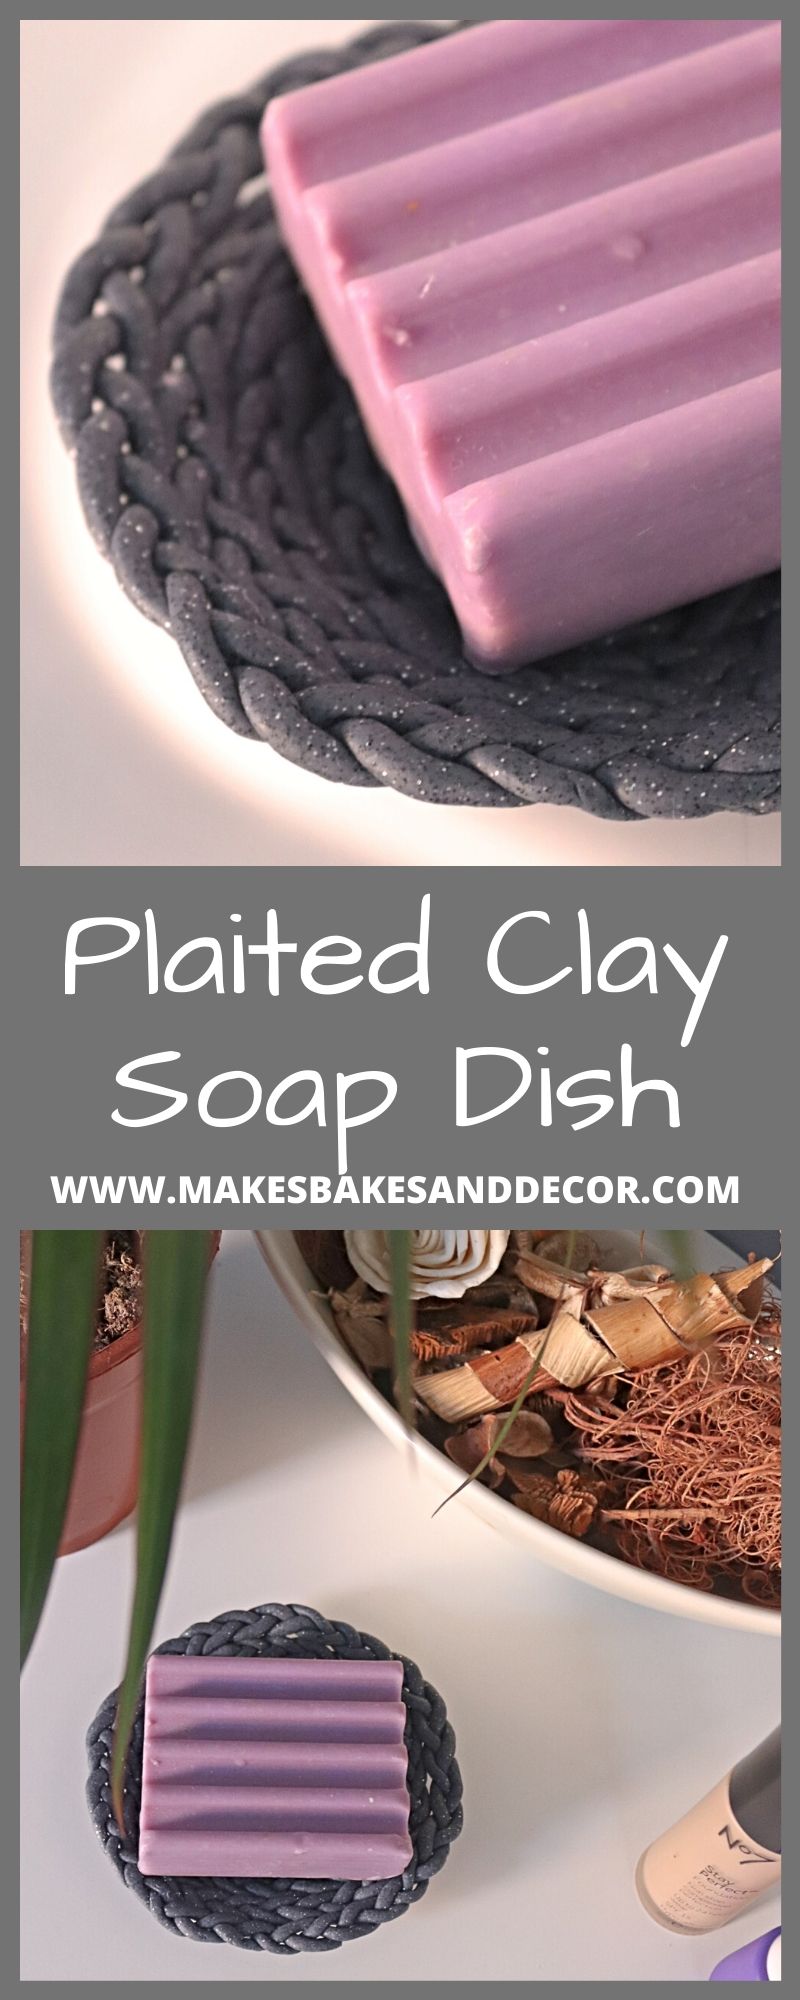 plaited clay soap dish pin